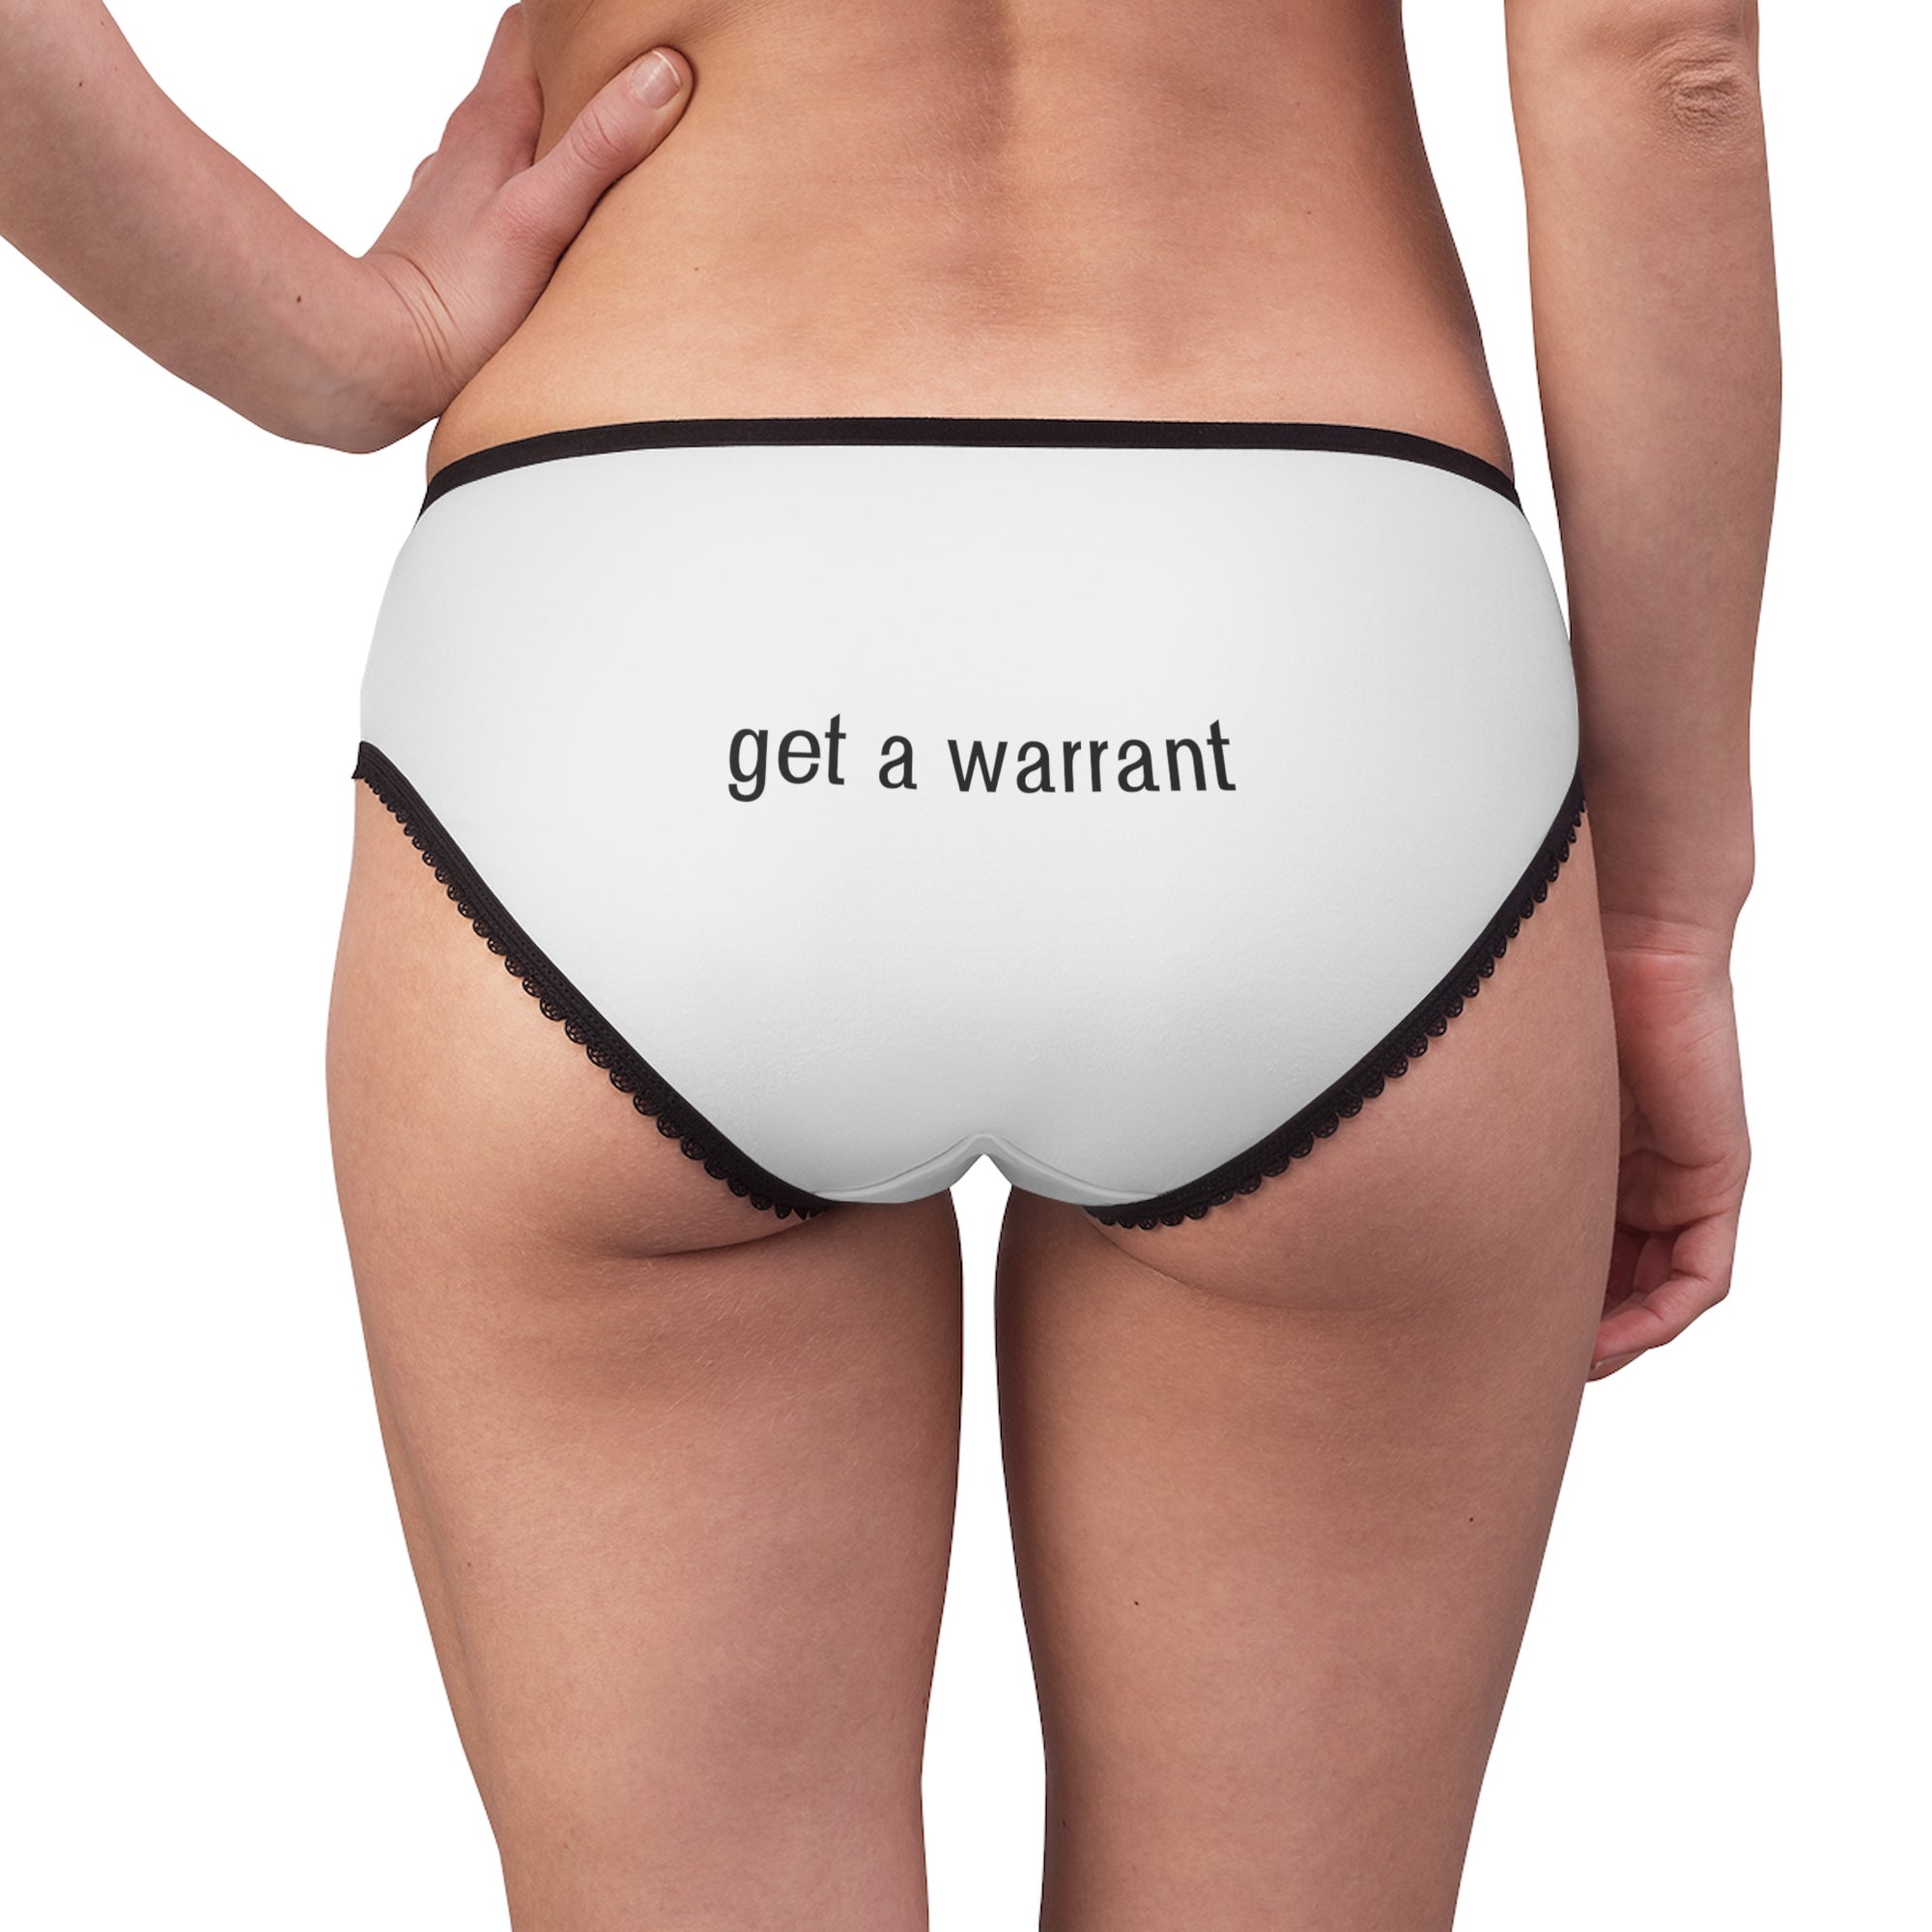 Get a Warrant - Female Lawyer Underwear